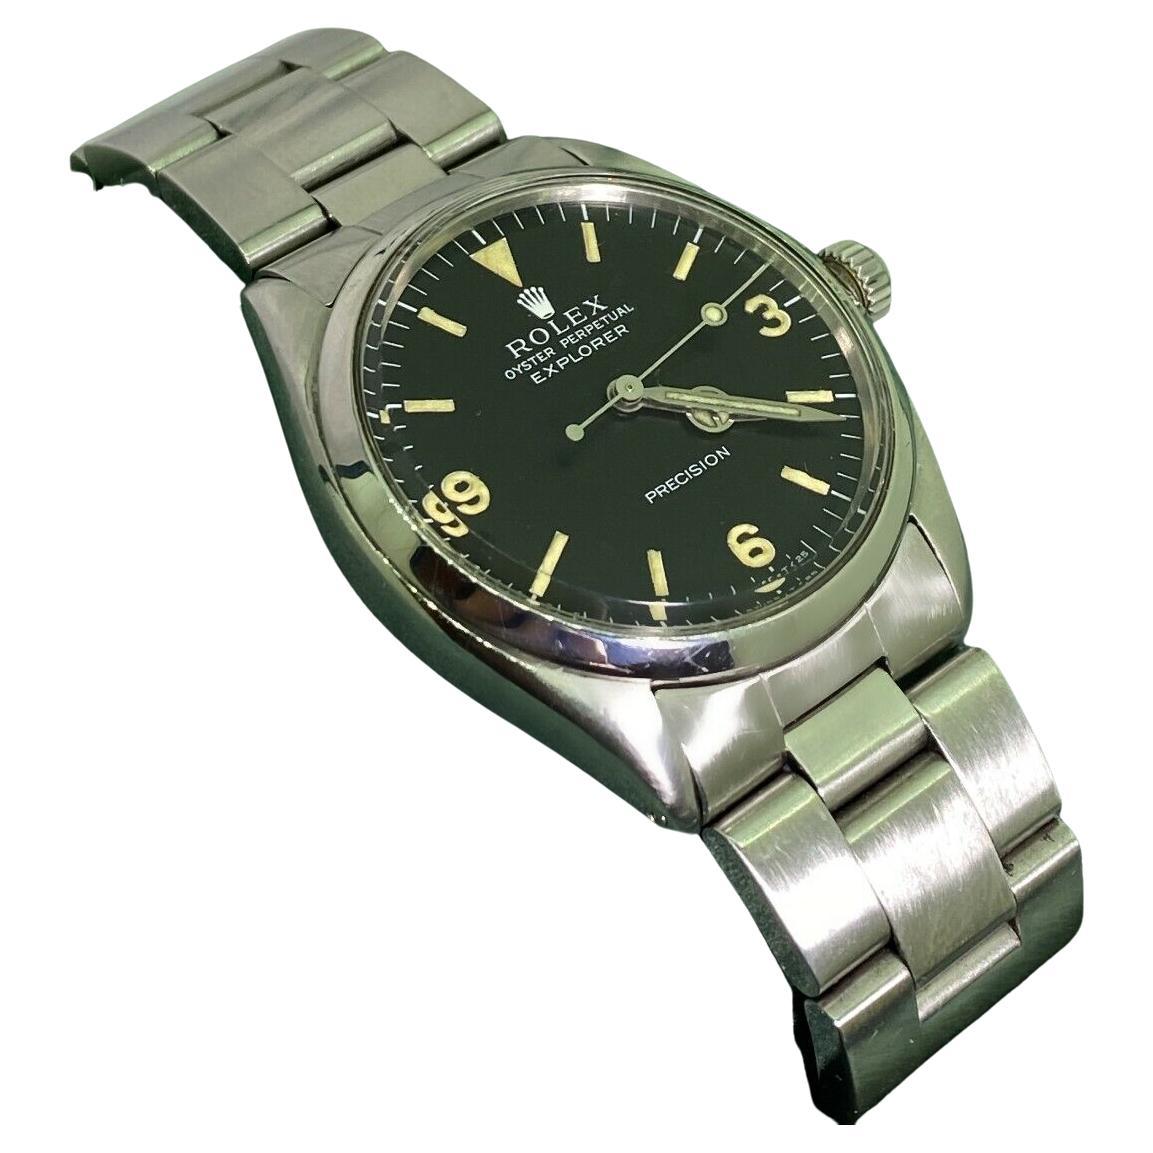 1963 Rolex Explorer Ref 5500-1002, Cal 1530 Automatic S/Steel Mens' Watch